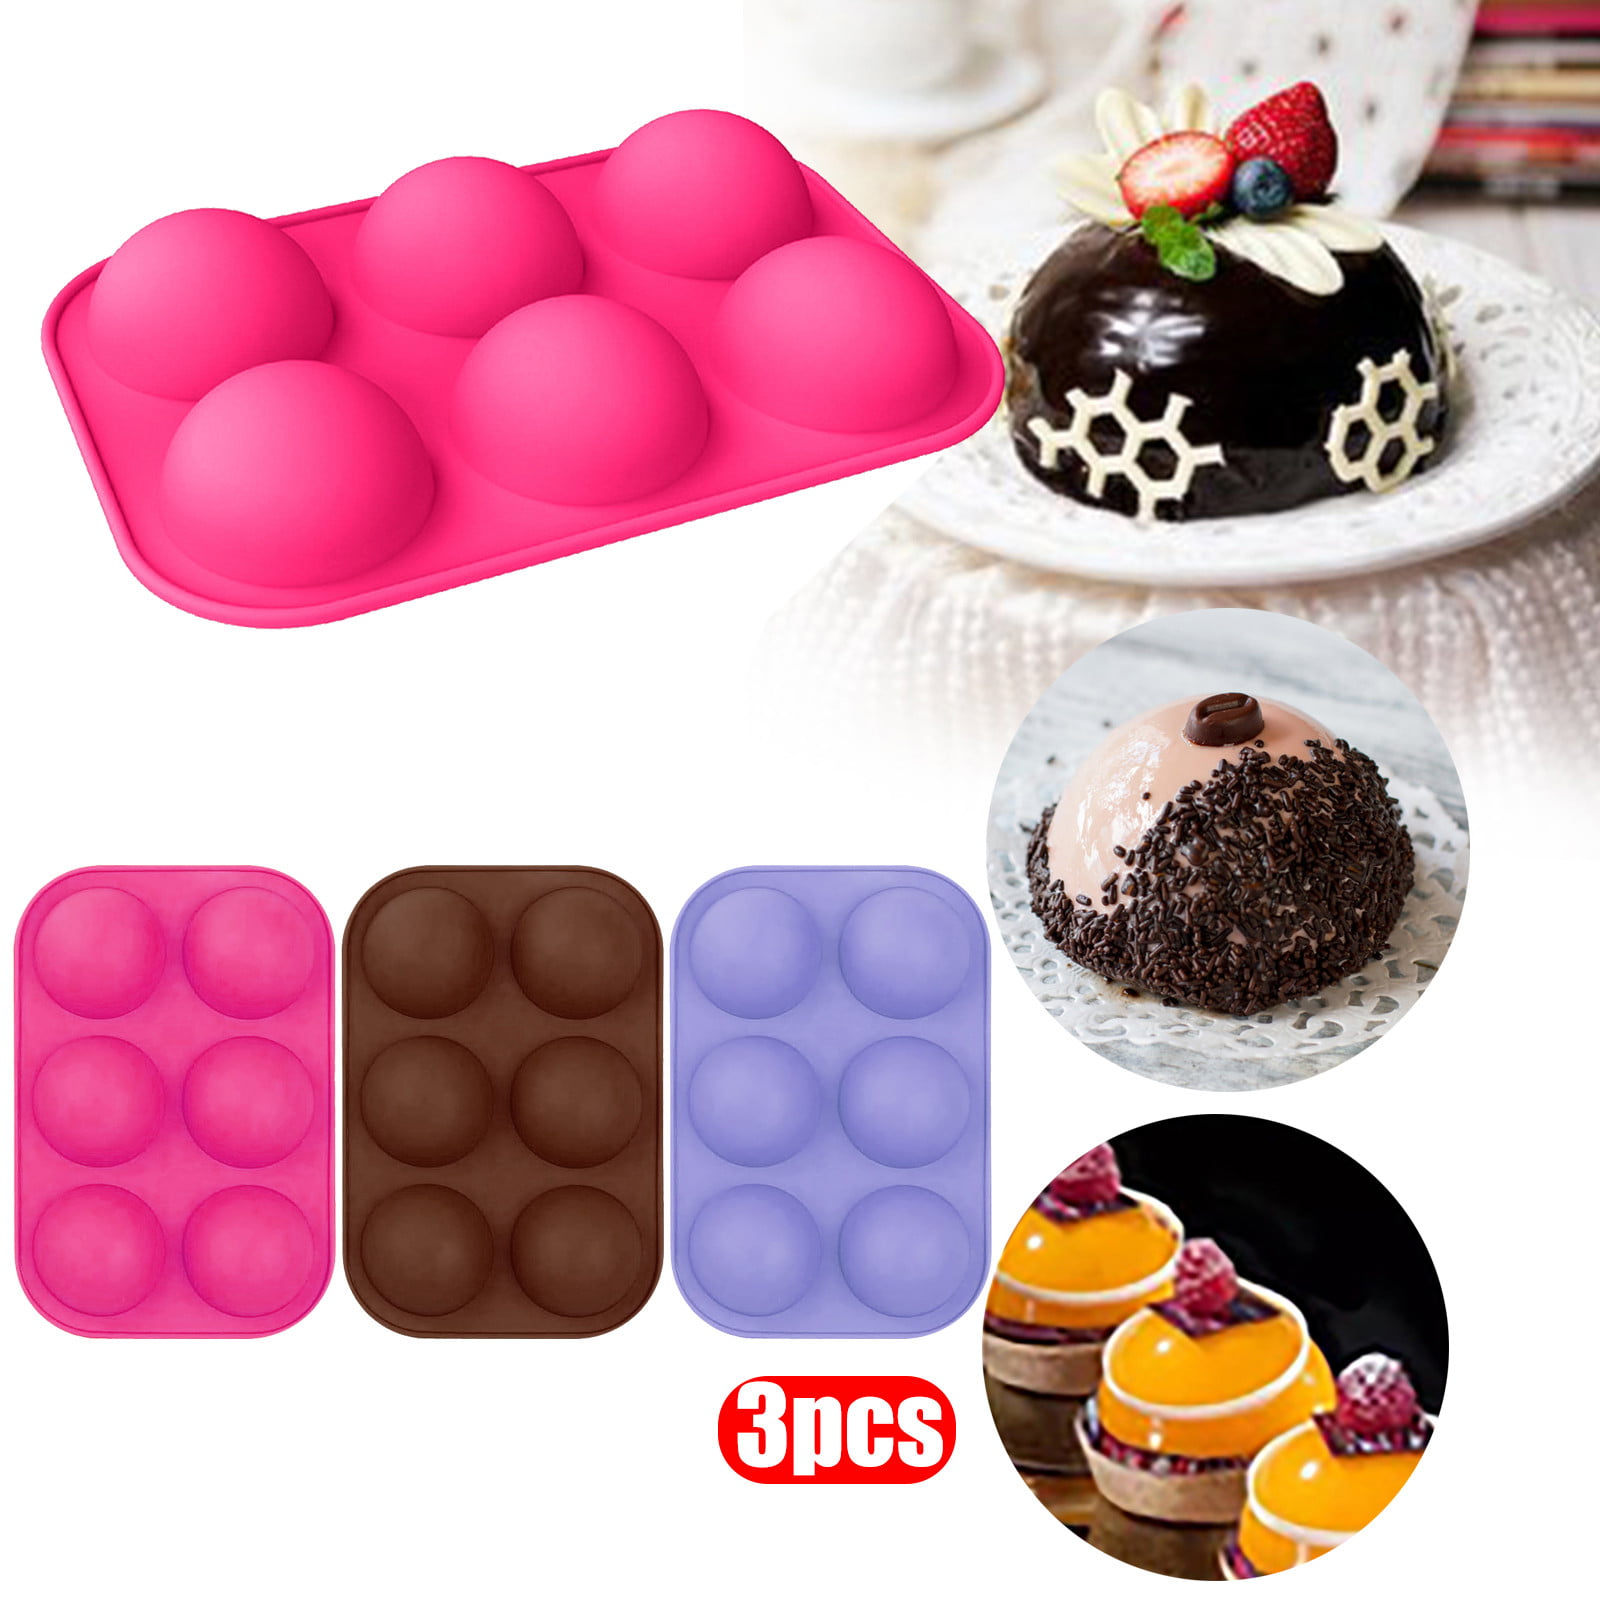 3pcs 6-Cavity Silicone Donut Cupcake Mold Muffin Chocolate Cake Baking Mould Pan 